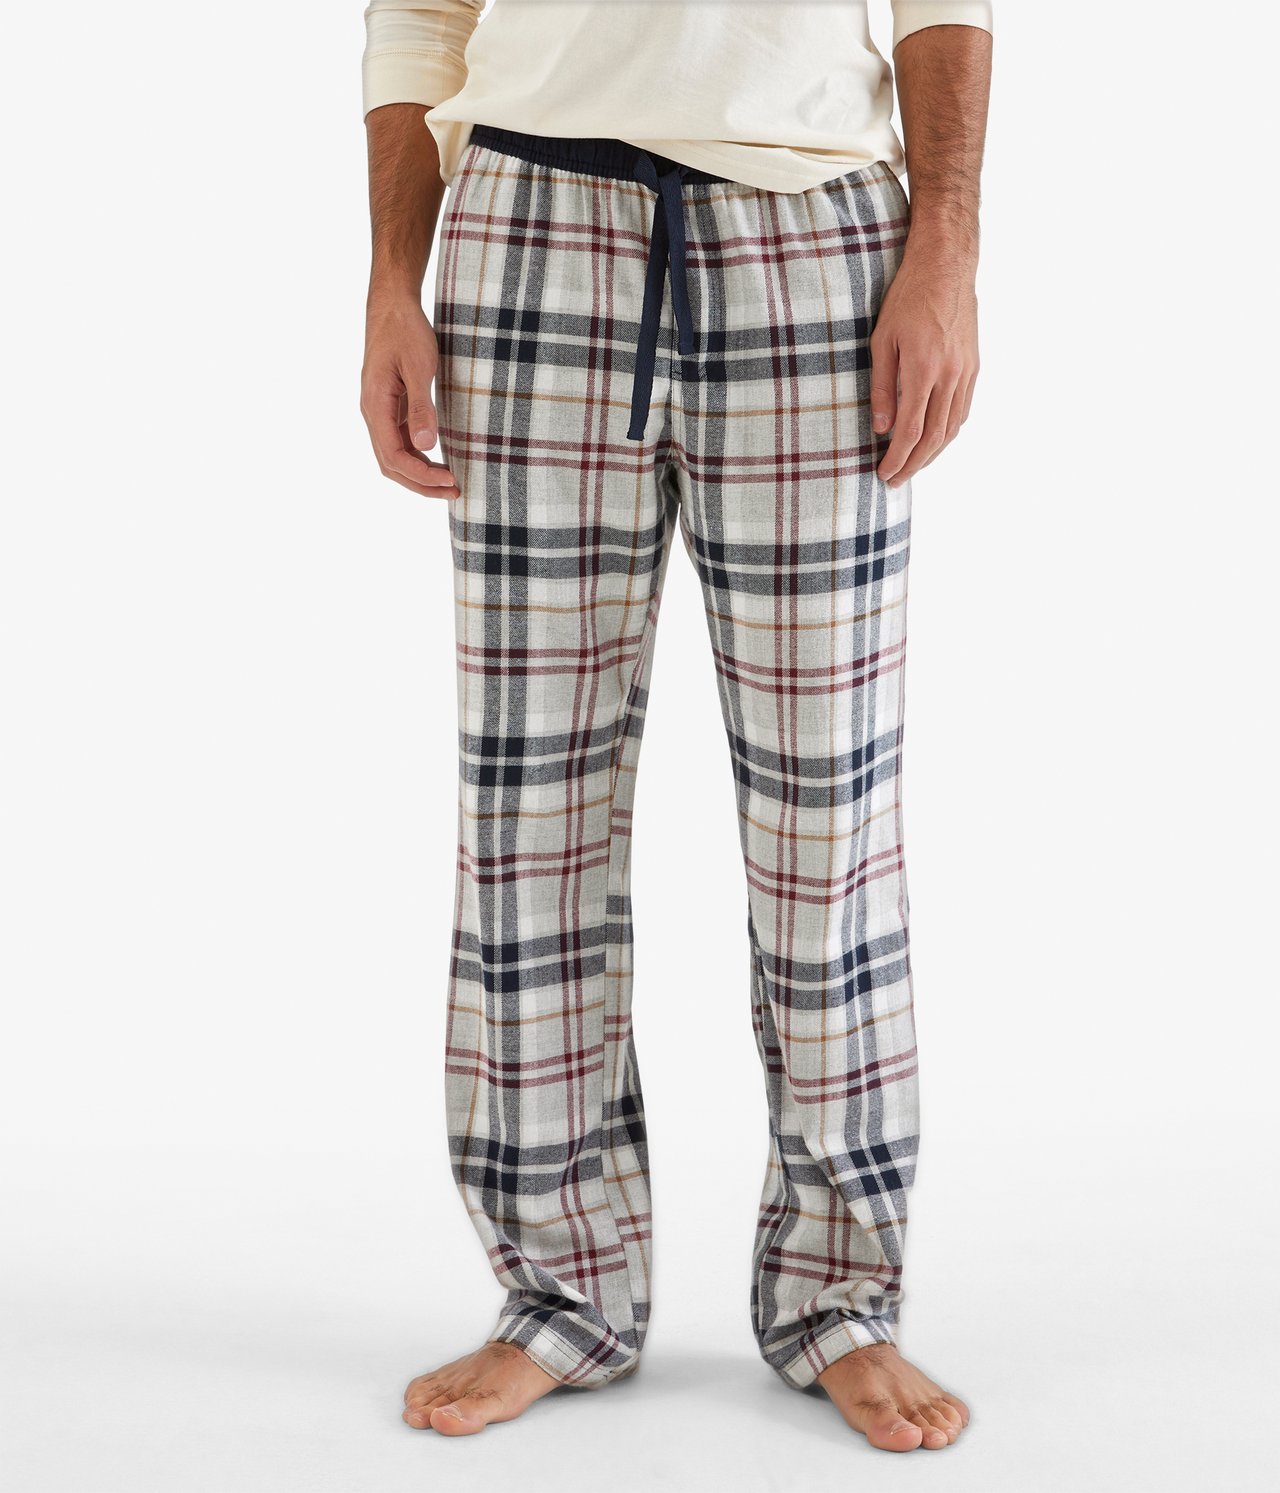 Pyjamasbukse Lysegrå - L - 0